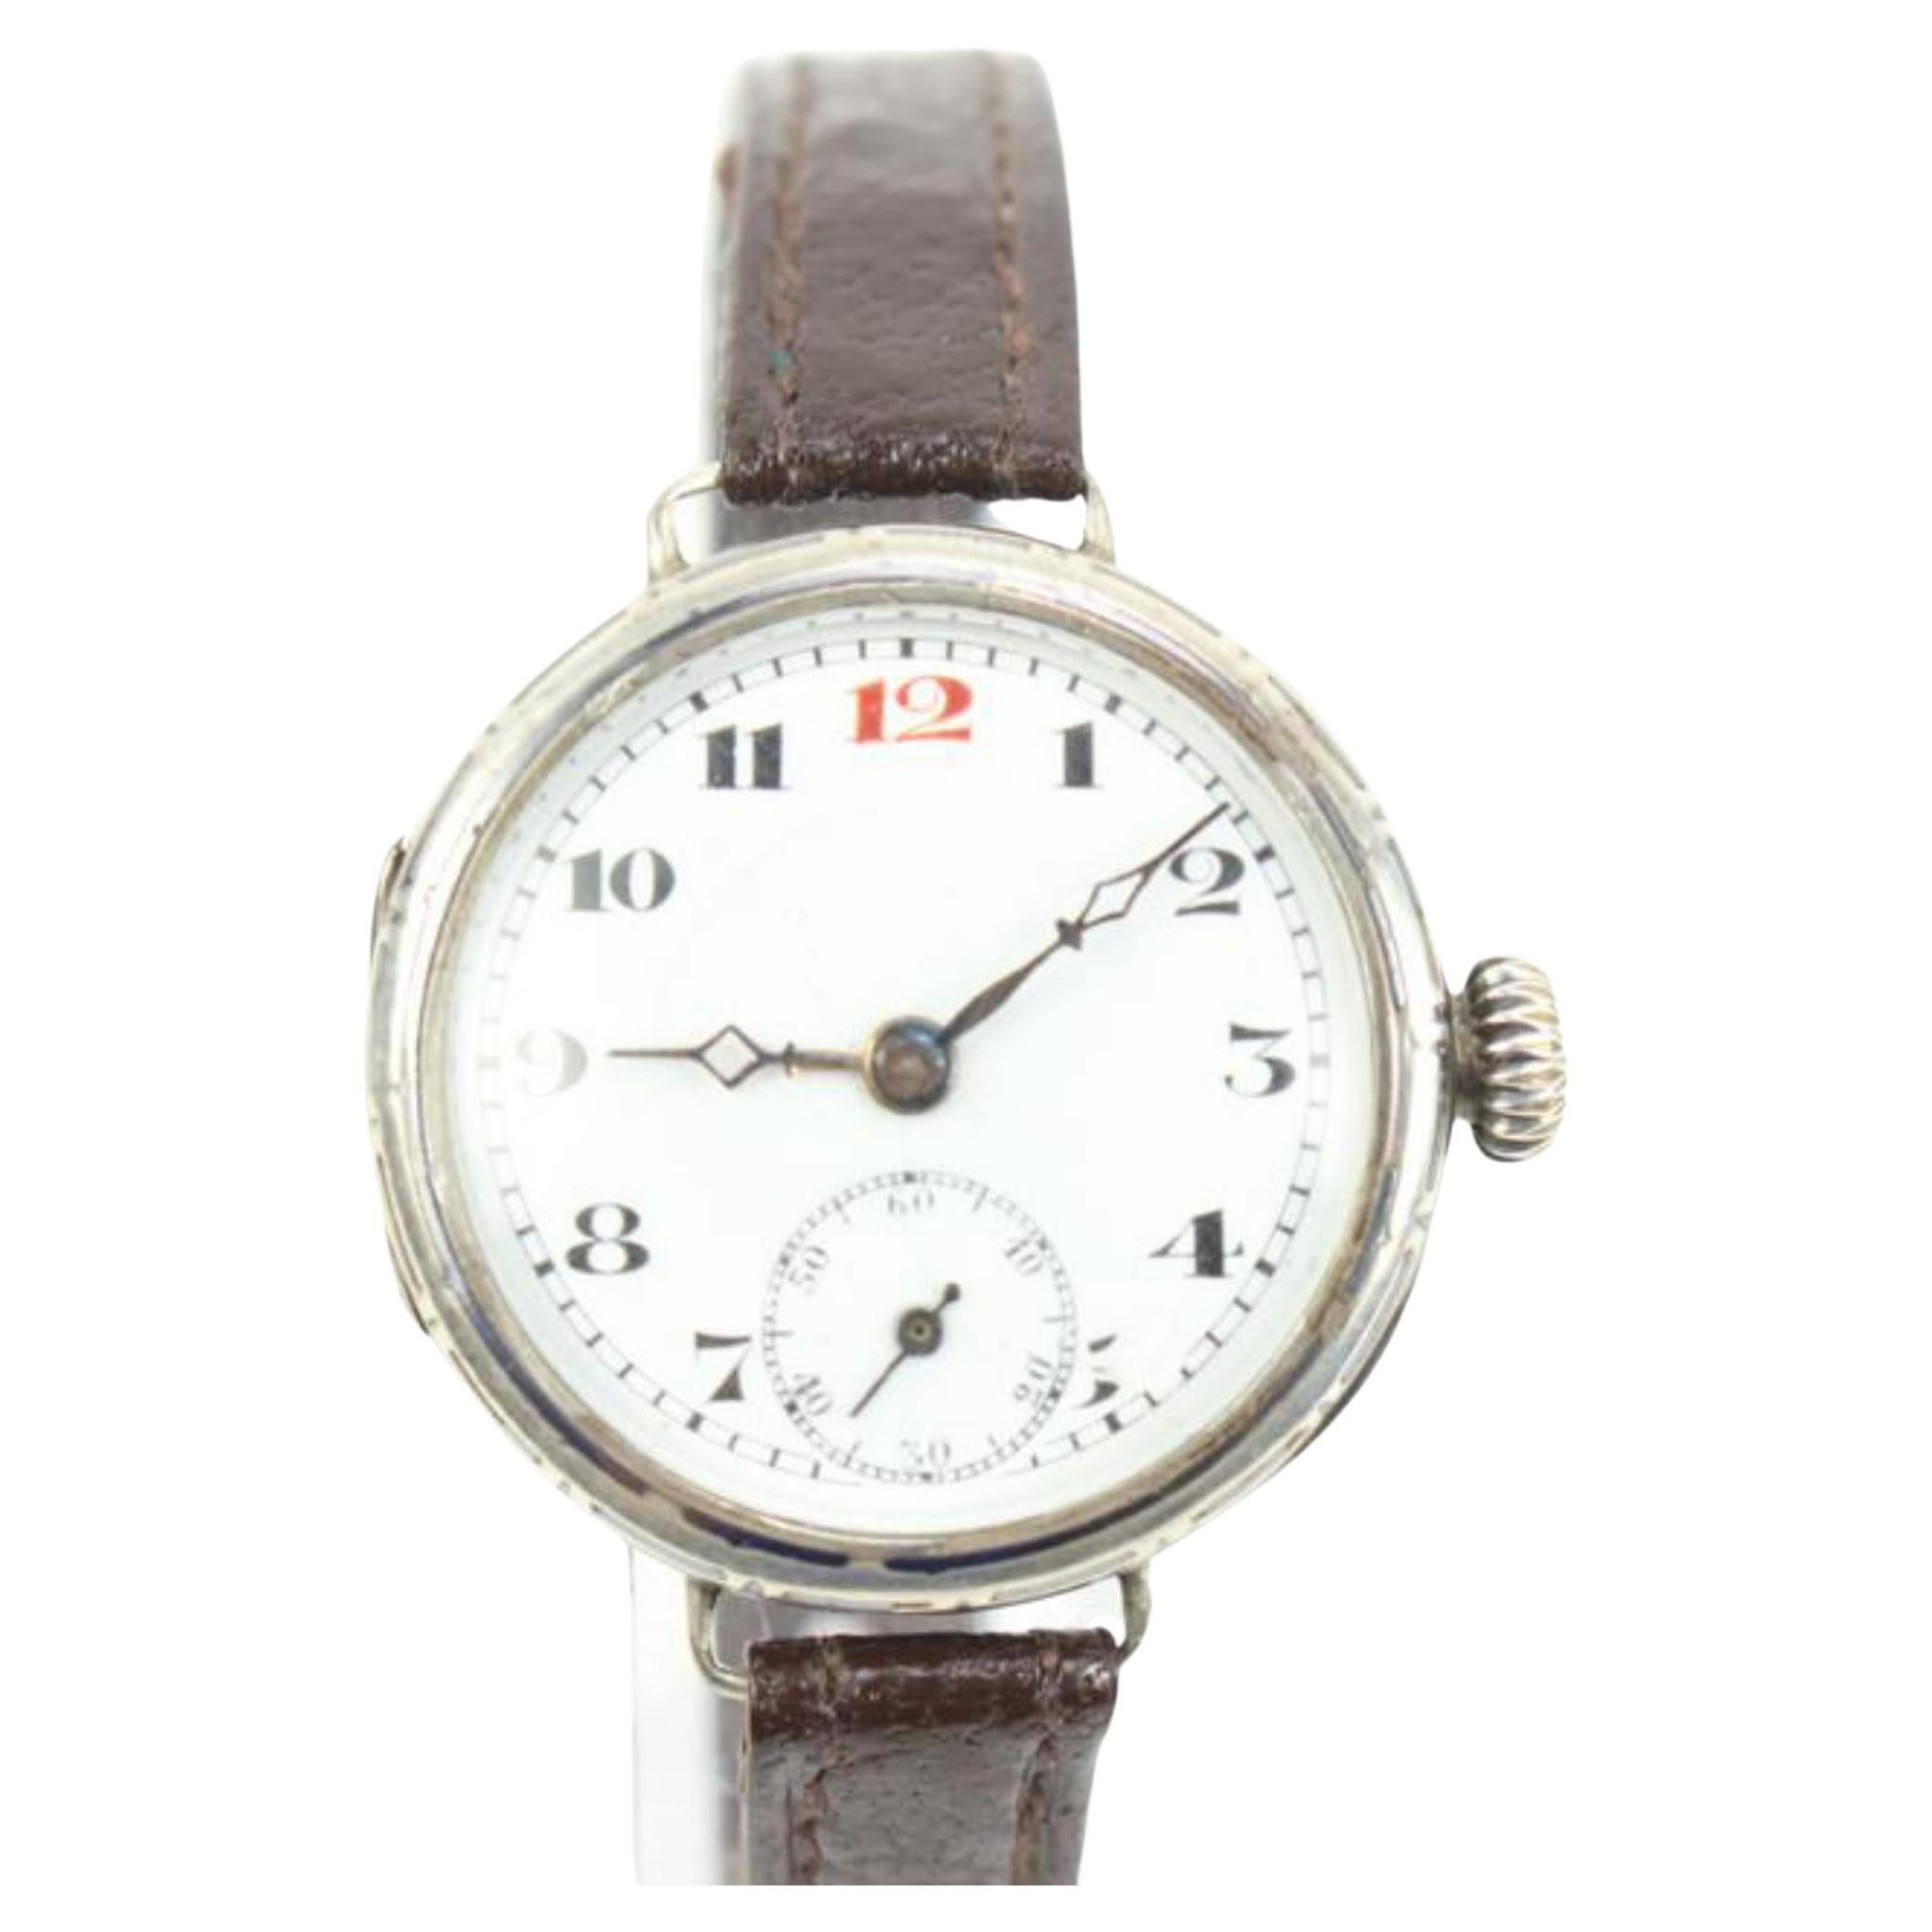 Rolex Russian Market WWI Era Trench Watch 48r50